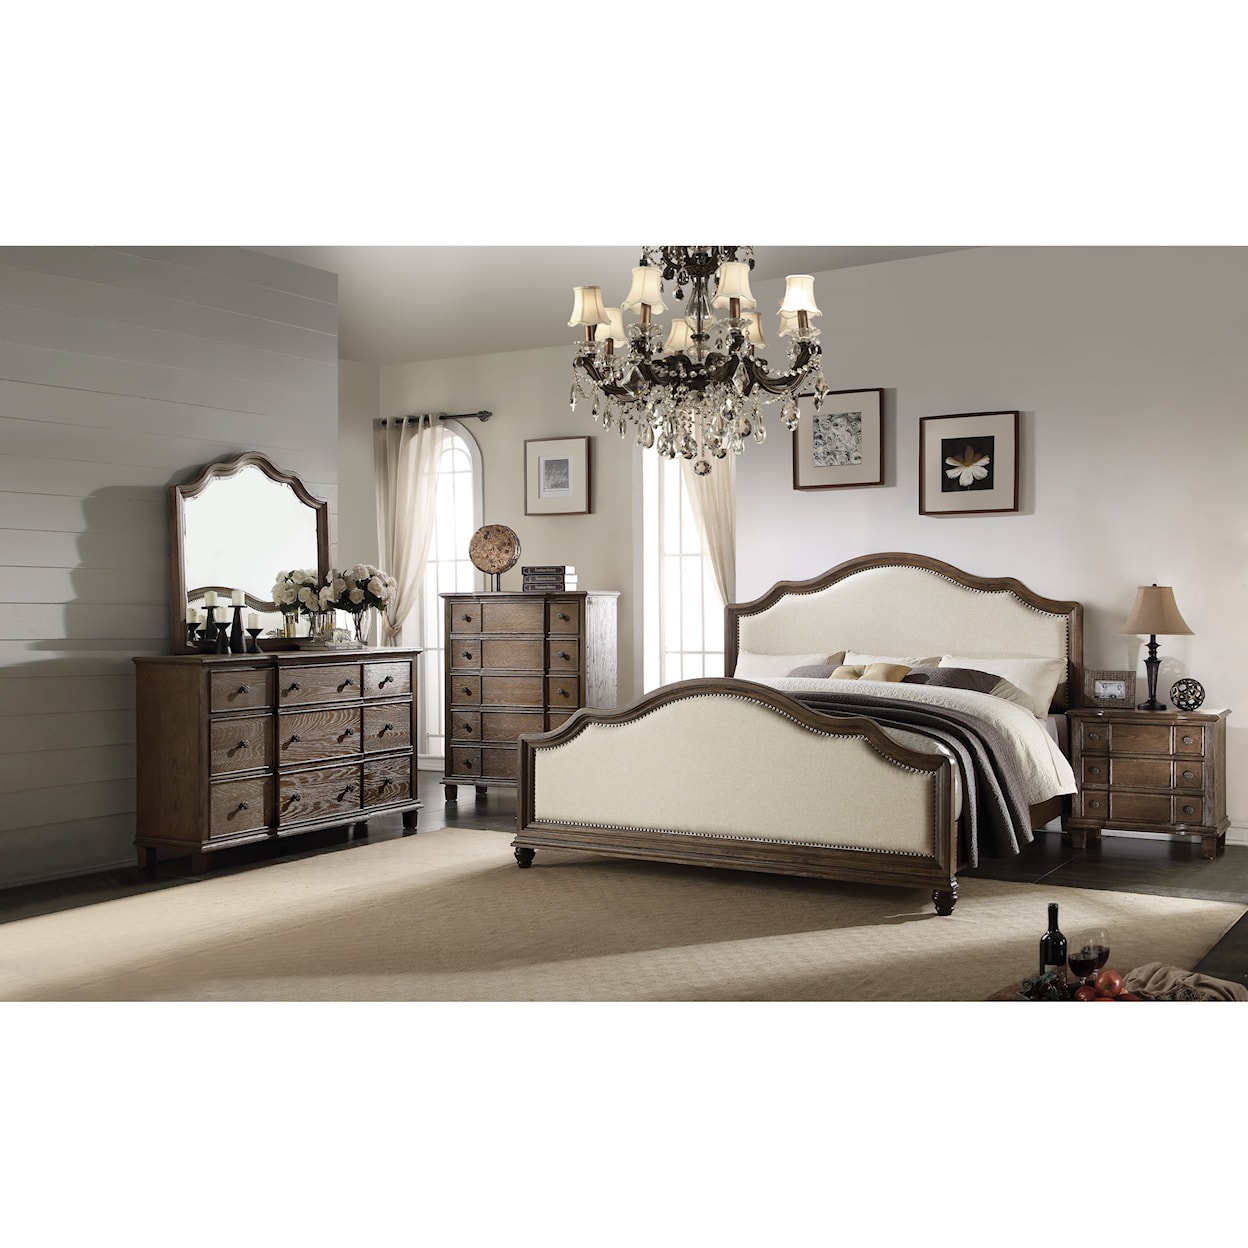 Acme Furniture Baudouin California King Bedroom Group